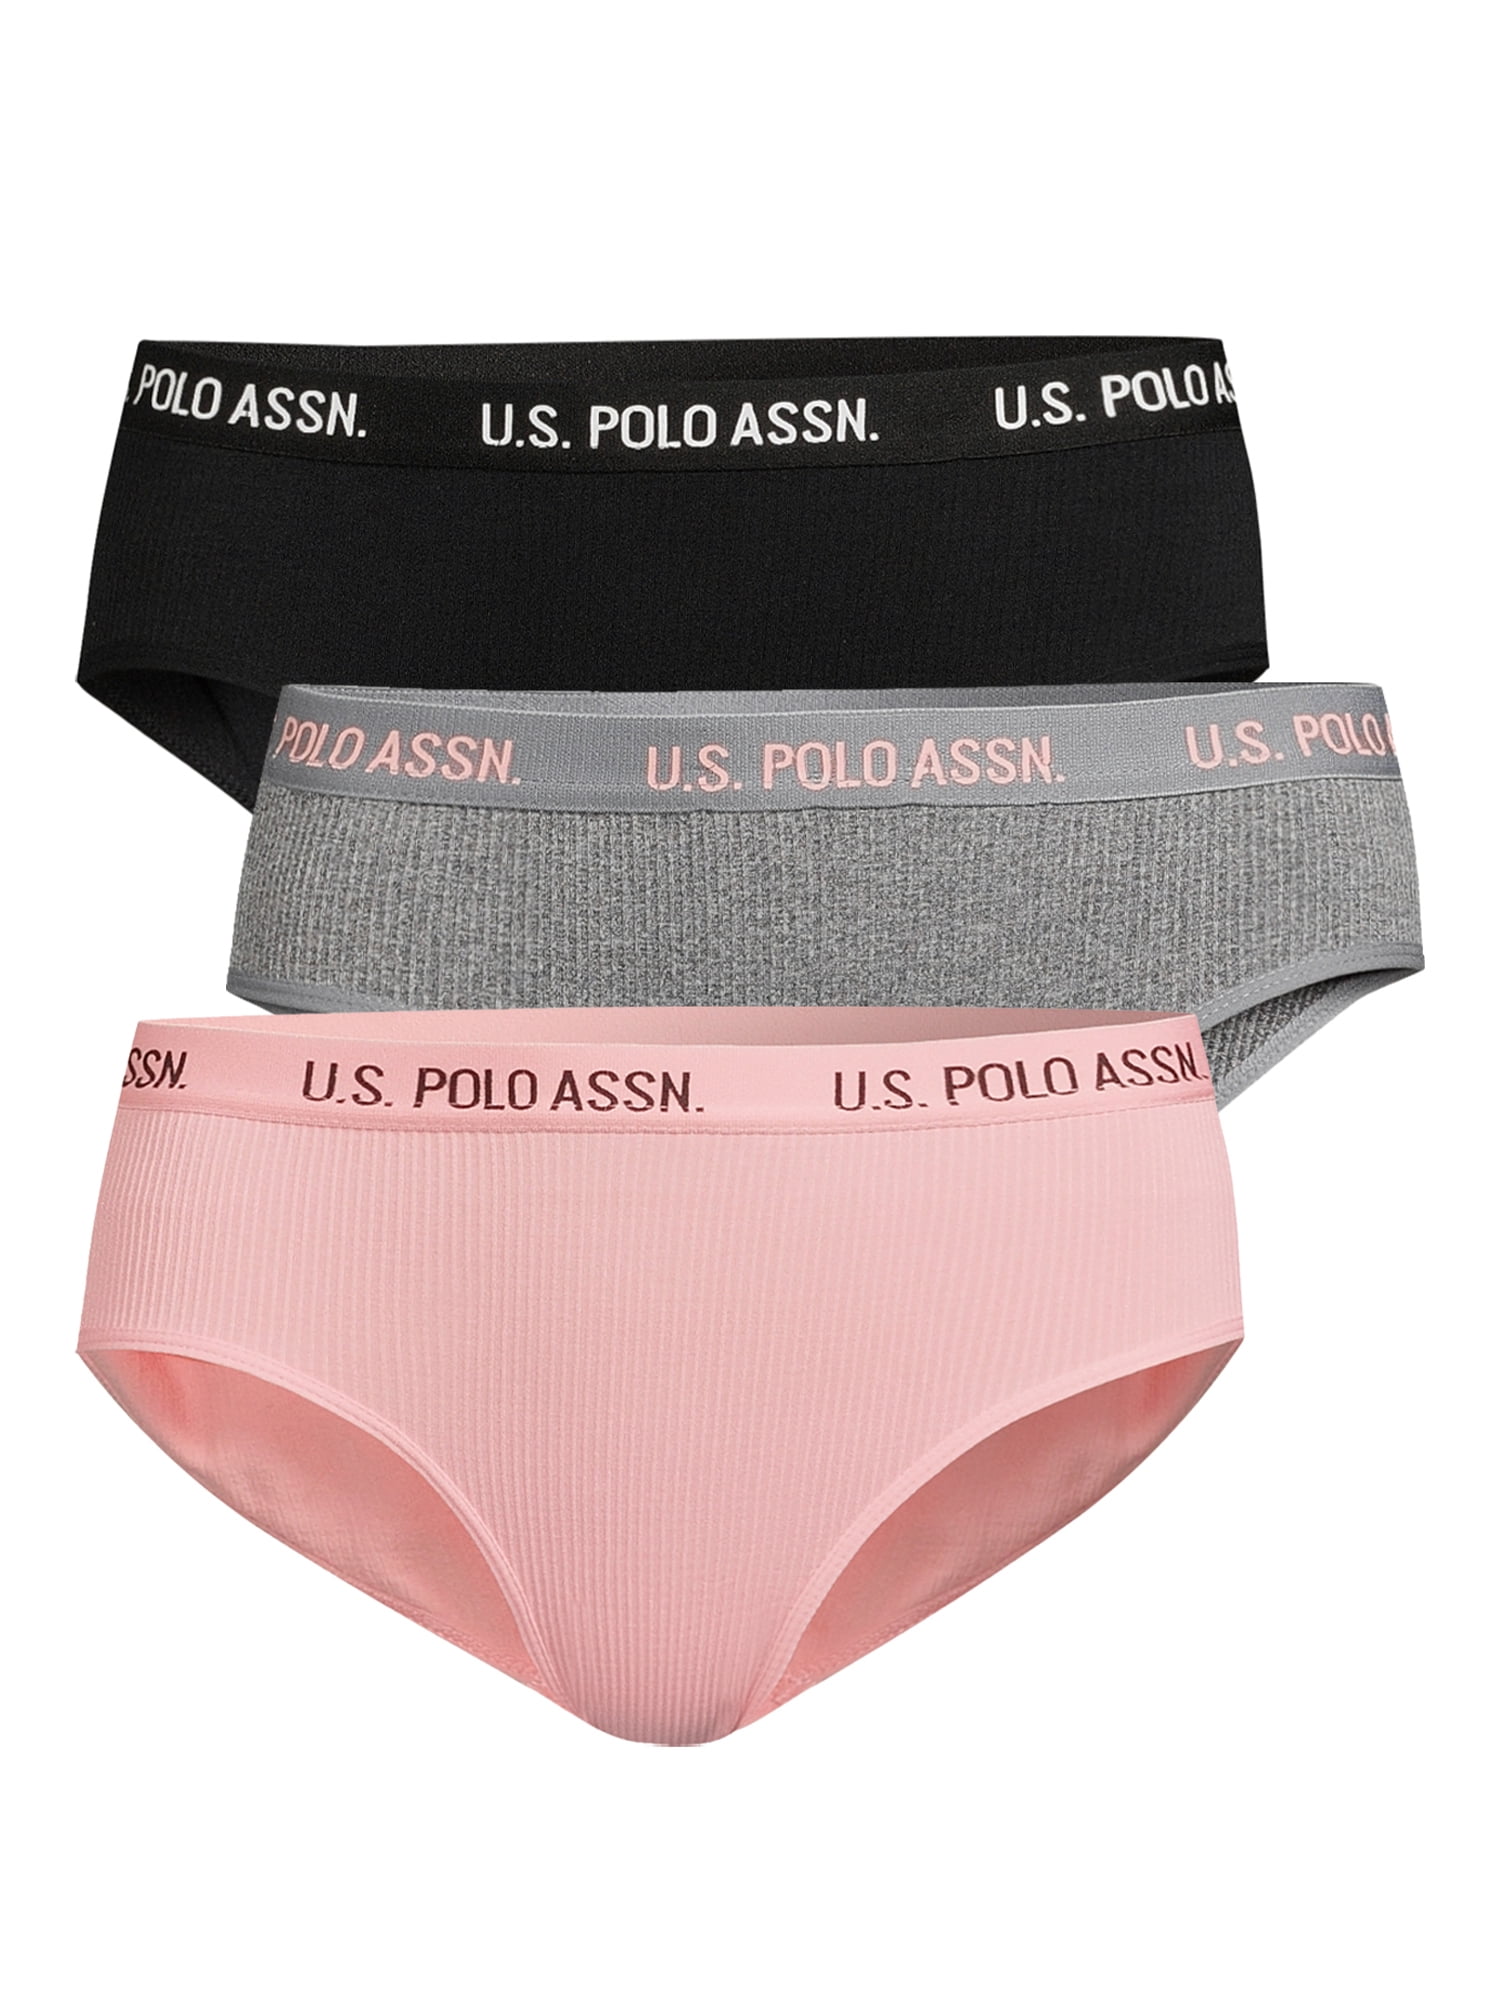 Womens 3 Pack Elastic Waist Lace Boyshort Panties Set Black/Grey/Pink Large U.S Polo Assn